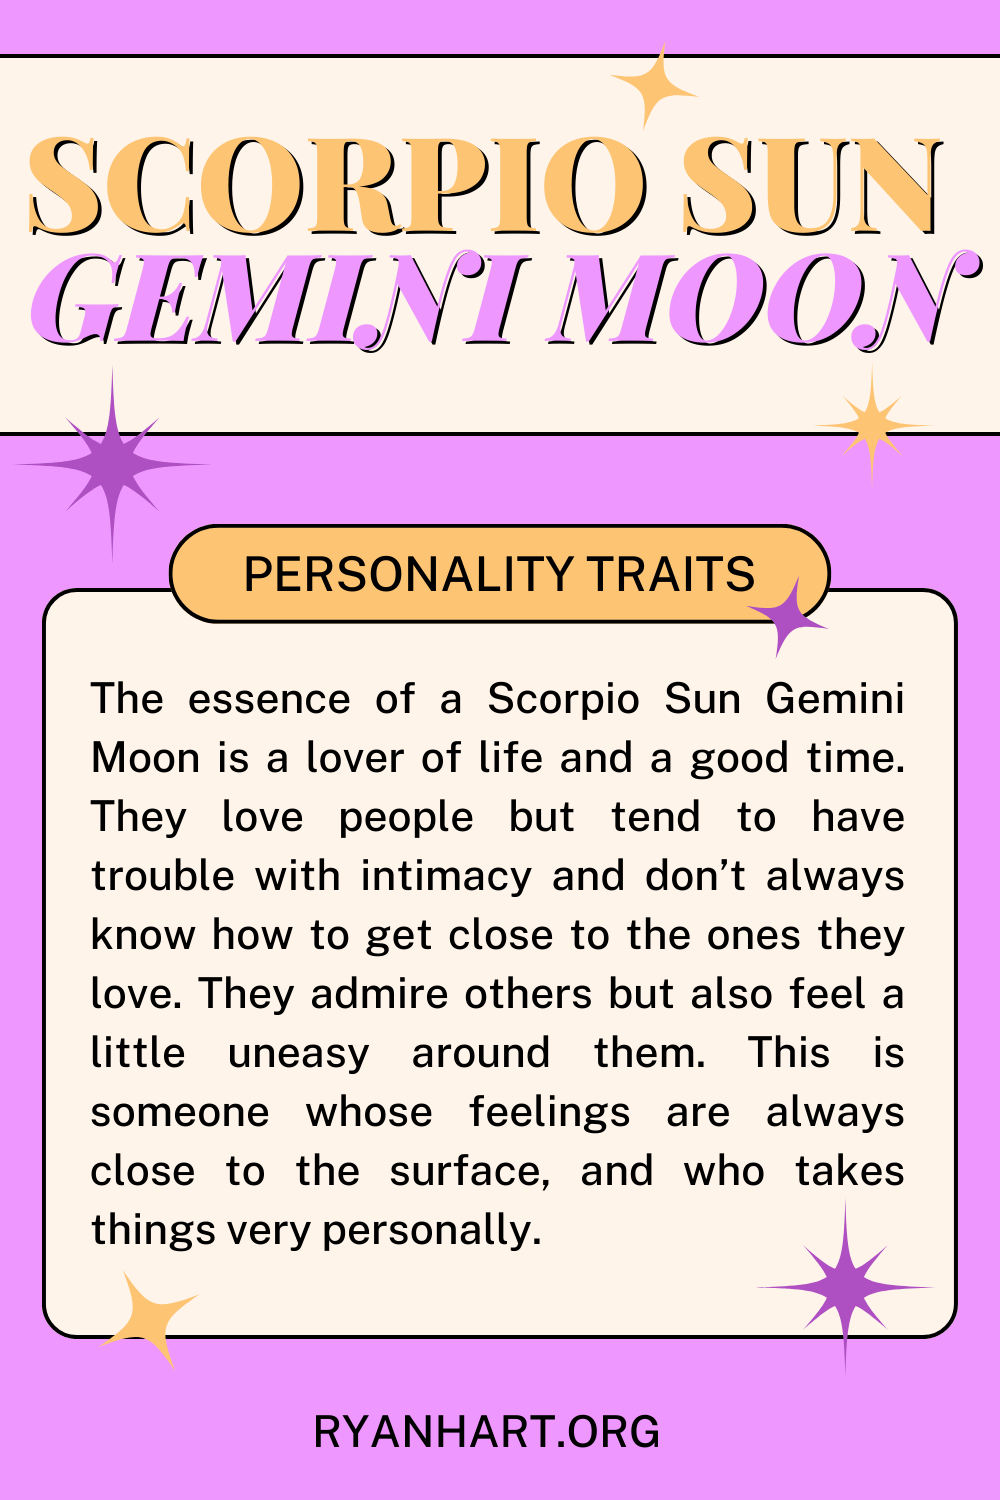 Scorpio Sun Gemini Moon Description